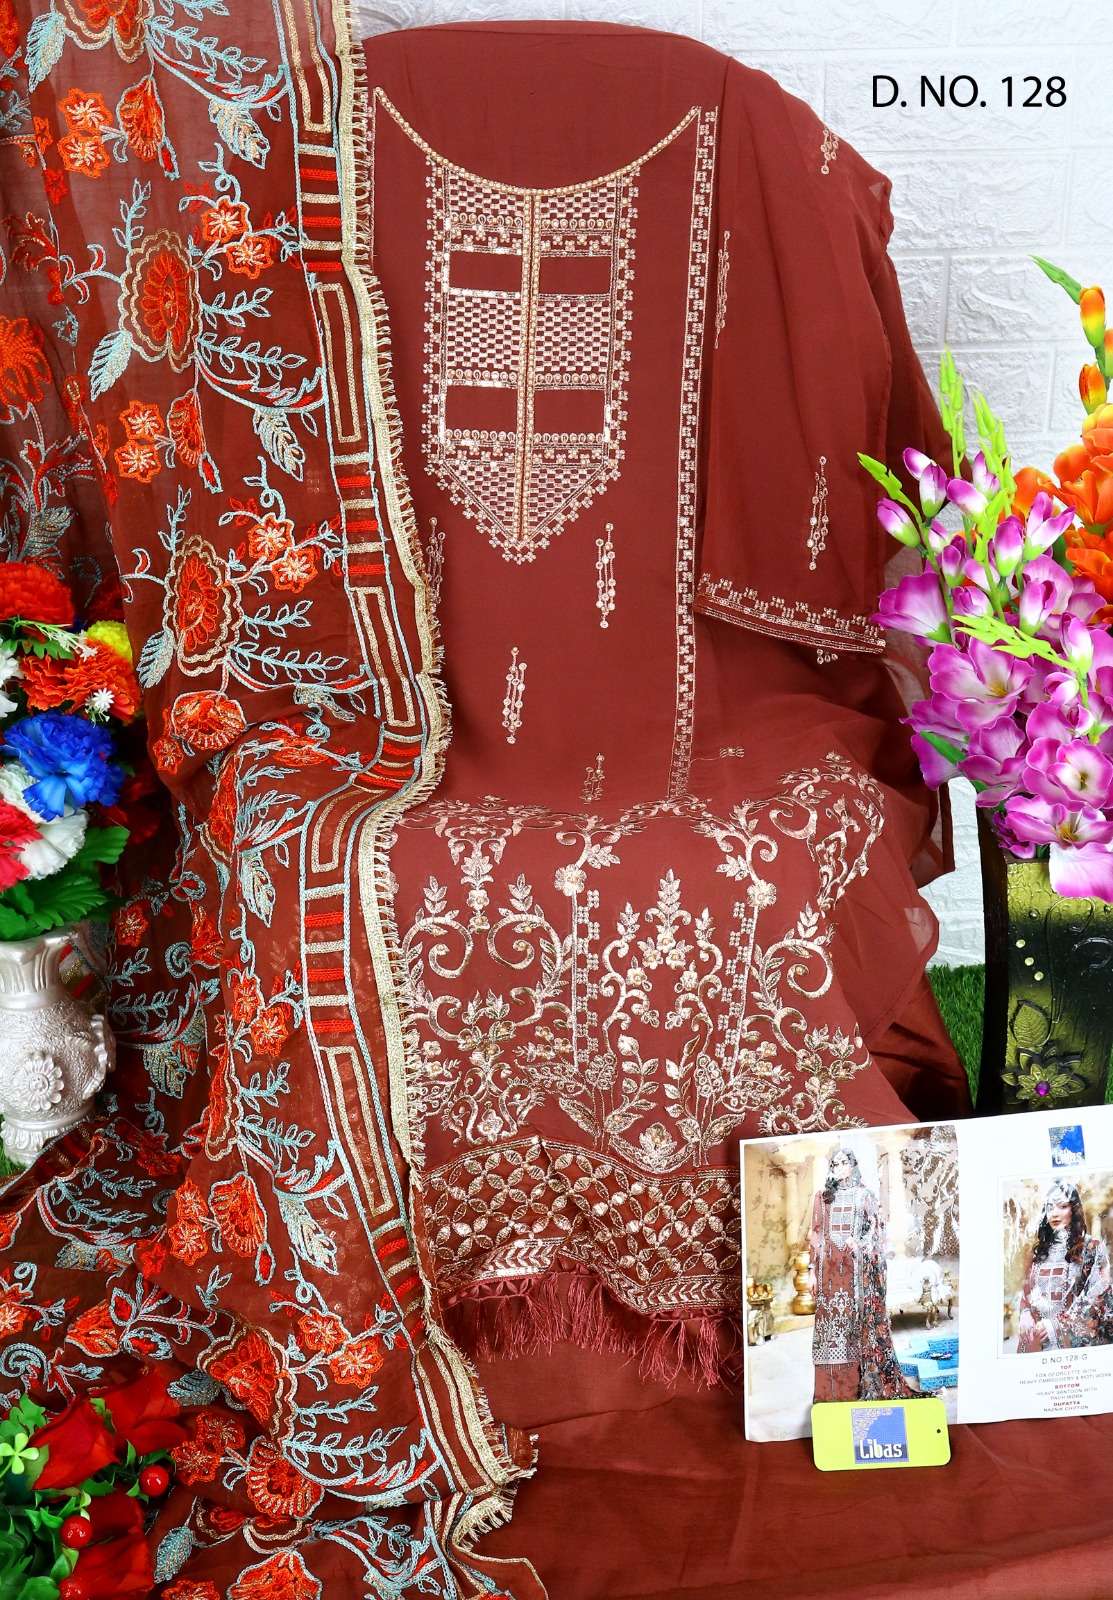 libas 128 series georgette designer pakistani salwar suits online supplier surat